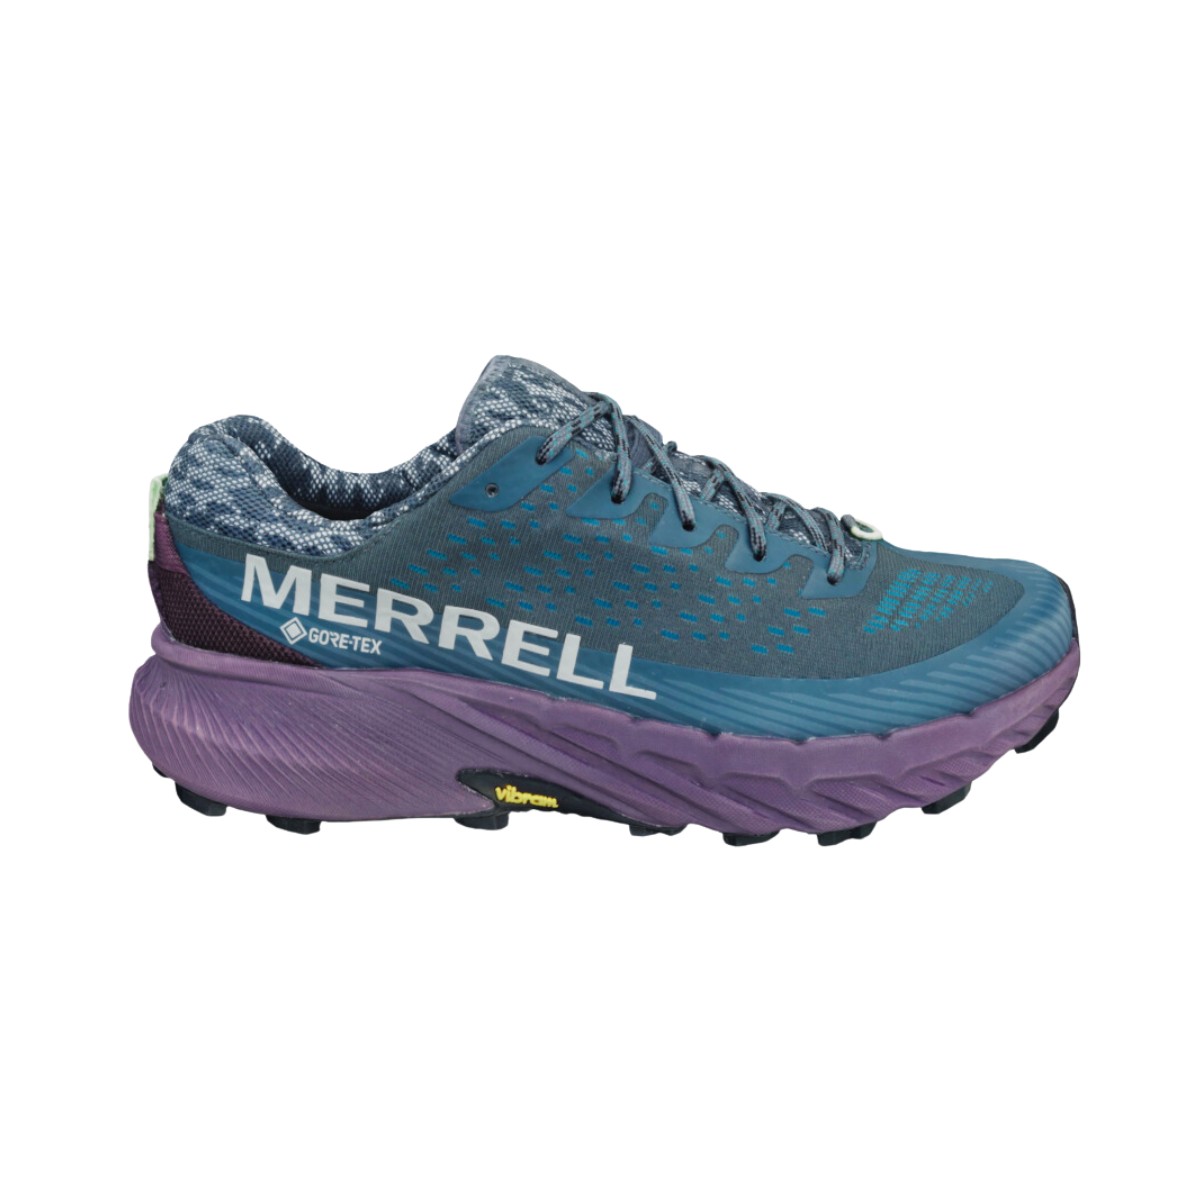 SC Run günstig Kaufen-Merrell Agility Peak 5 GTX Schuhe Blau Lila AW24, Größe 41,5 - EUR. Merrell Agility Peak 5 GTX Schuhe Blau Lila AW24, Größe 41,5 - EUR <![CDATA[Merrell Agility Peak 5 GTX Schuhe Der Merrell Agility Peak 5 GTX ist ideal für Trailrunner